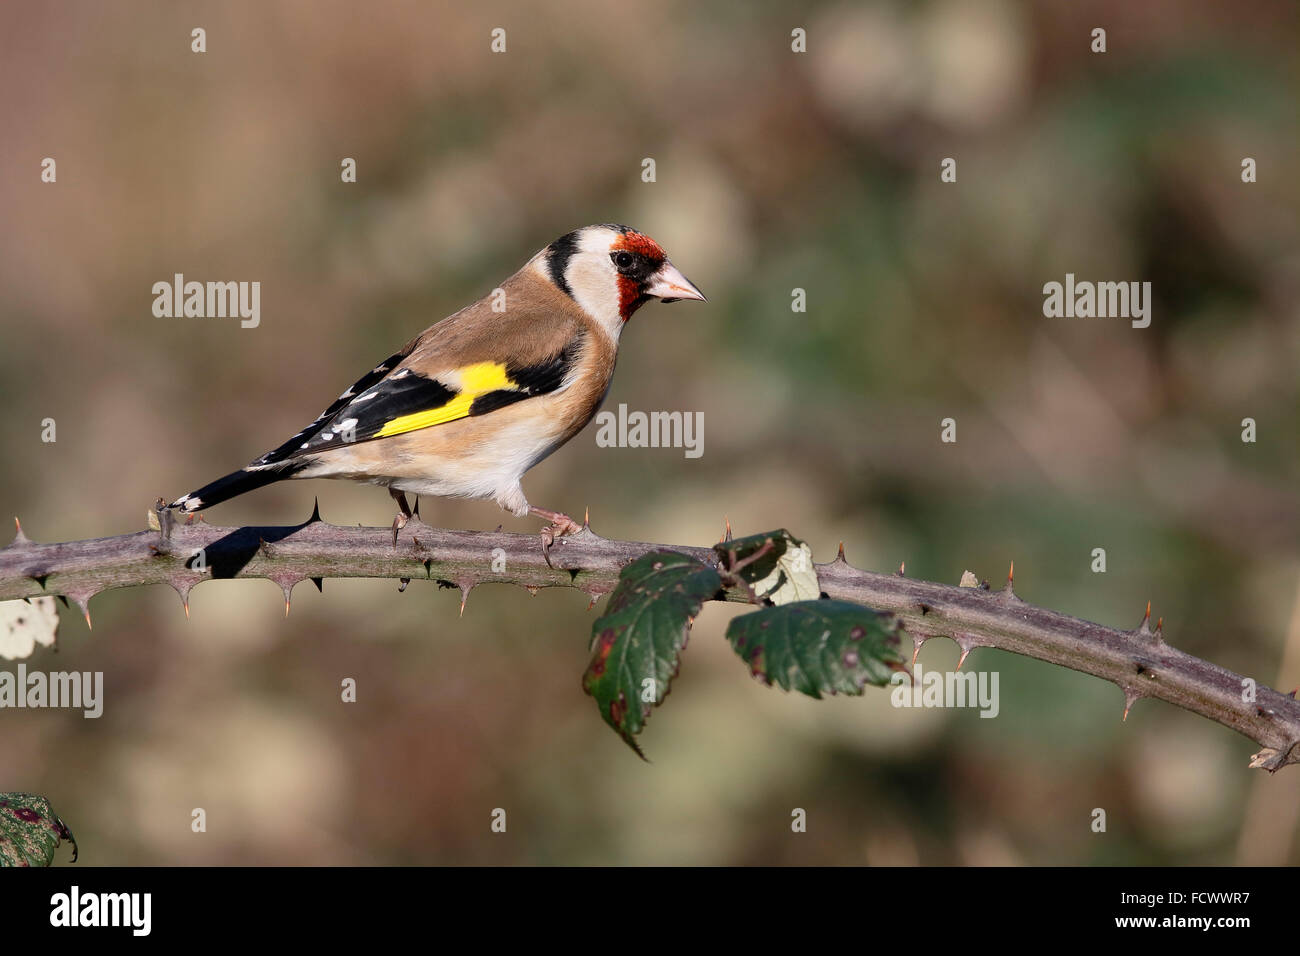 Cardellino, Carduelis carduelis, singolo uccello sul ramo, Warwickshire, Gennaio 2016 Foto Stock